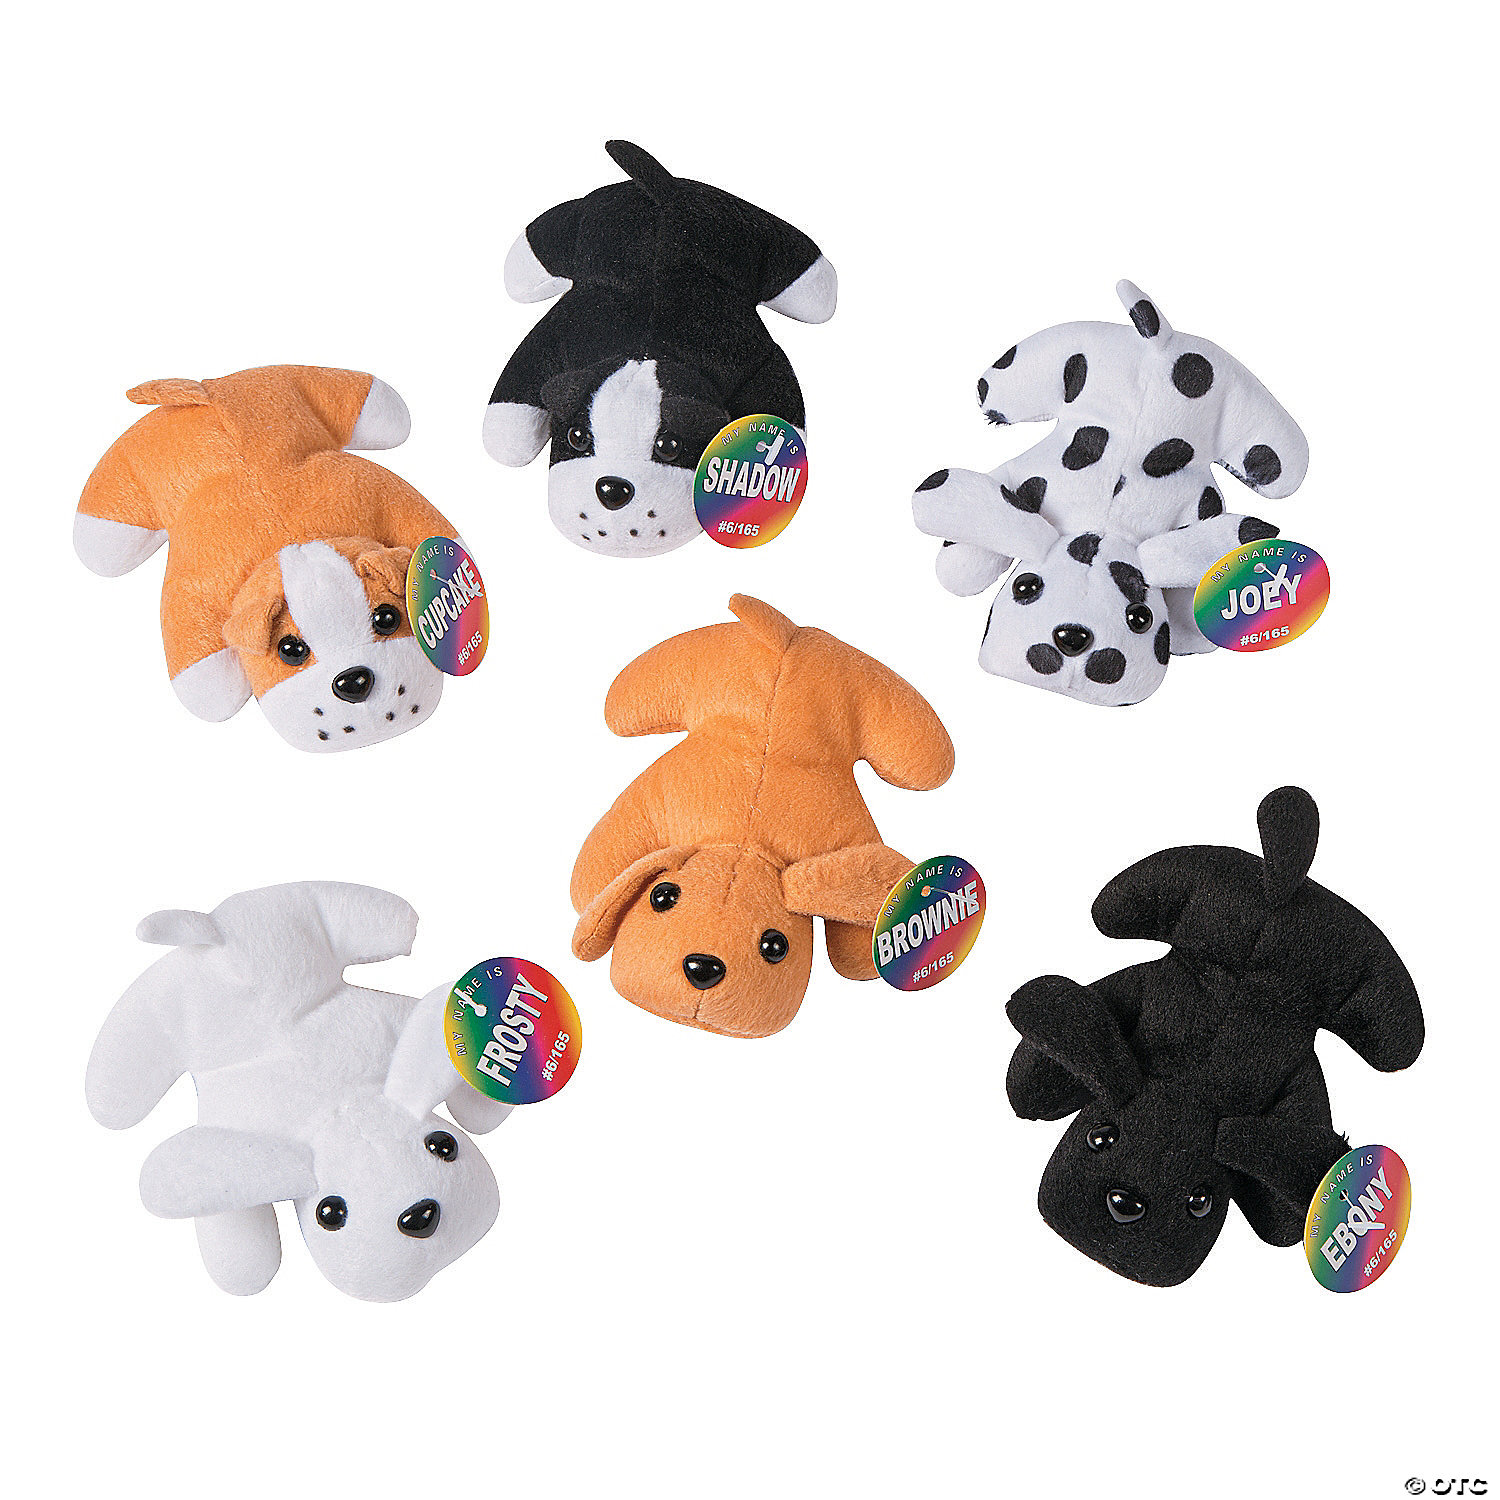 Cute Little Dog Pet Huntaway Learning Resources Miniature Plush Stuffed Toy Gift 